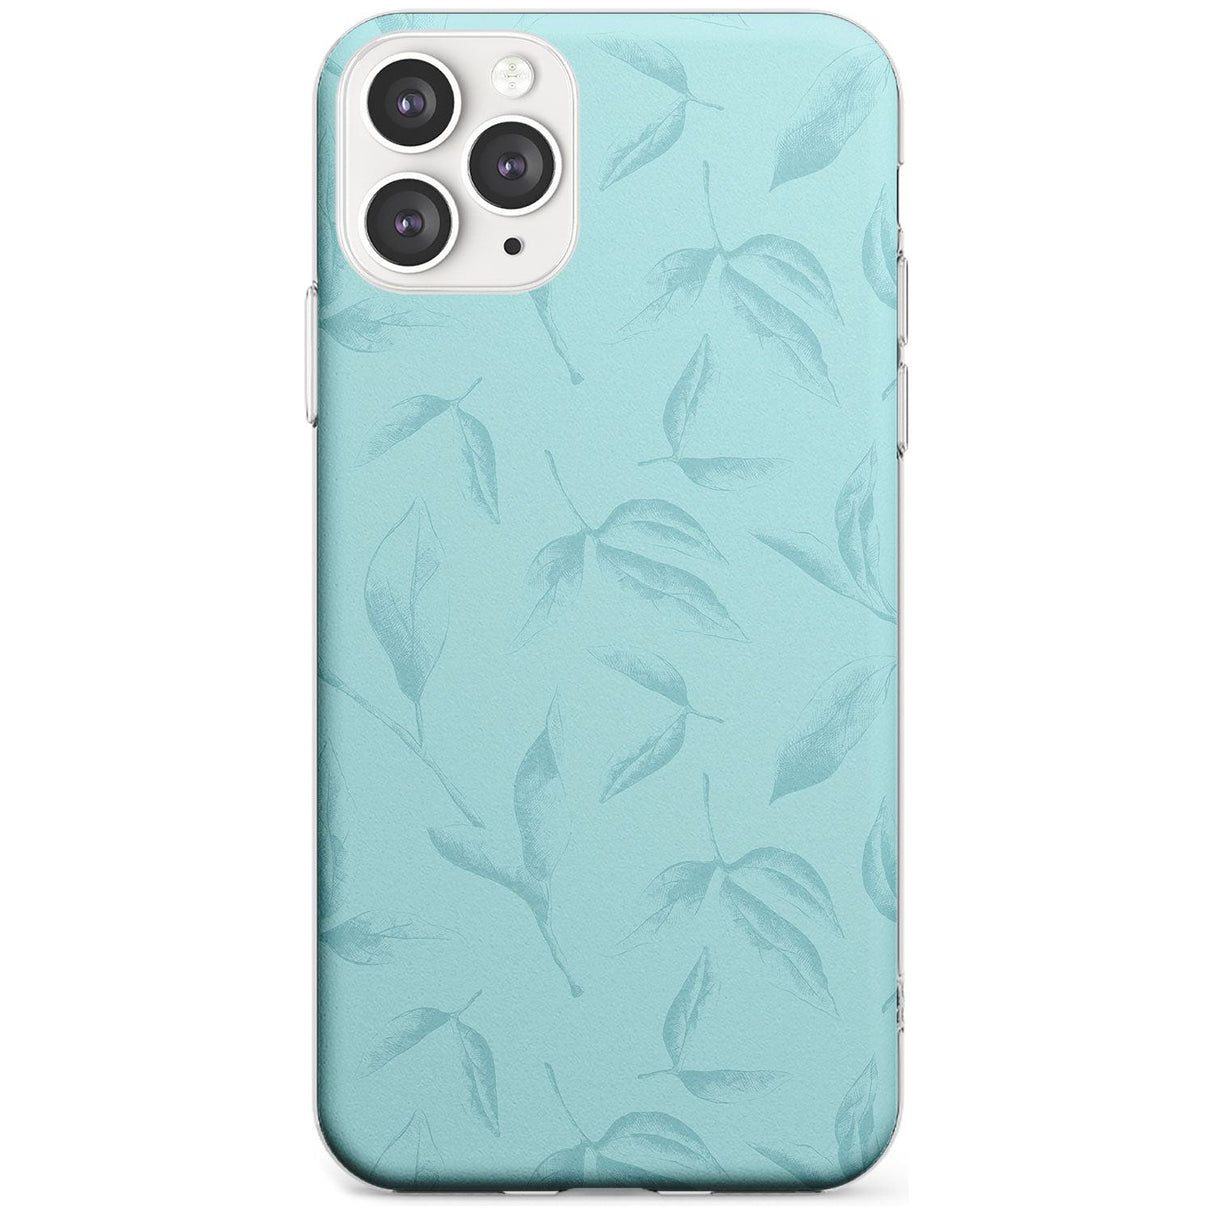 Blue Leaves Vintage Botanical Slim TPU Phone Case for iPhone 11 Pro Max